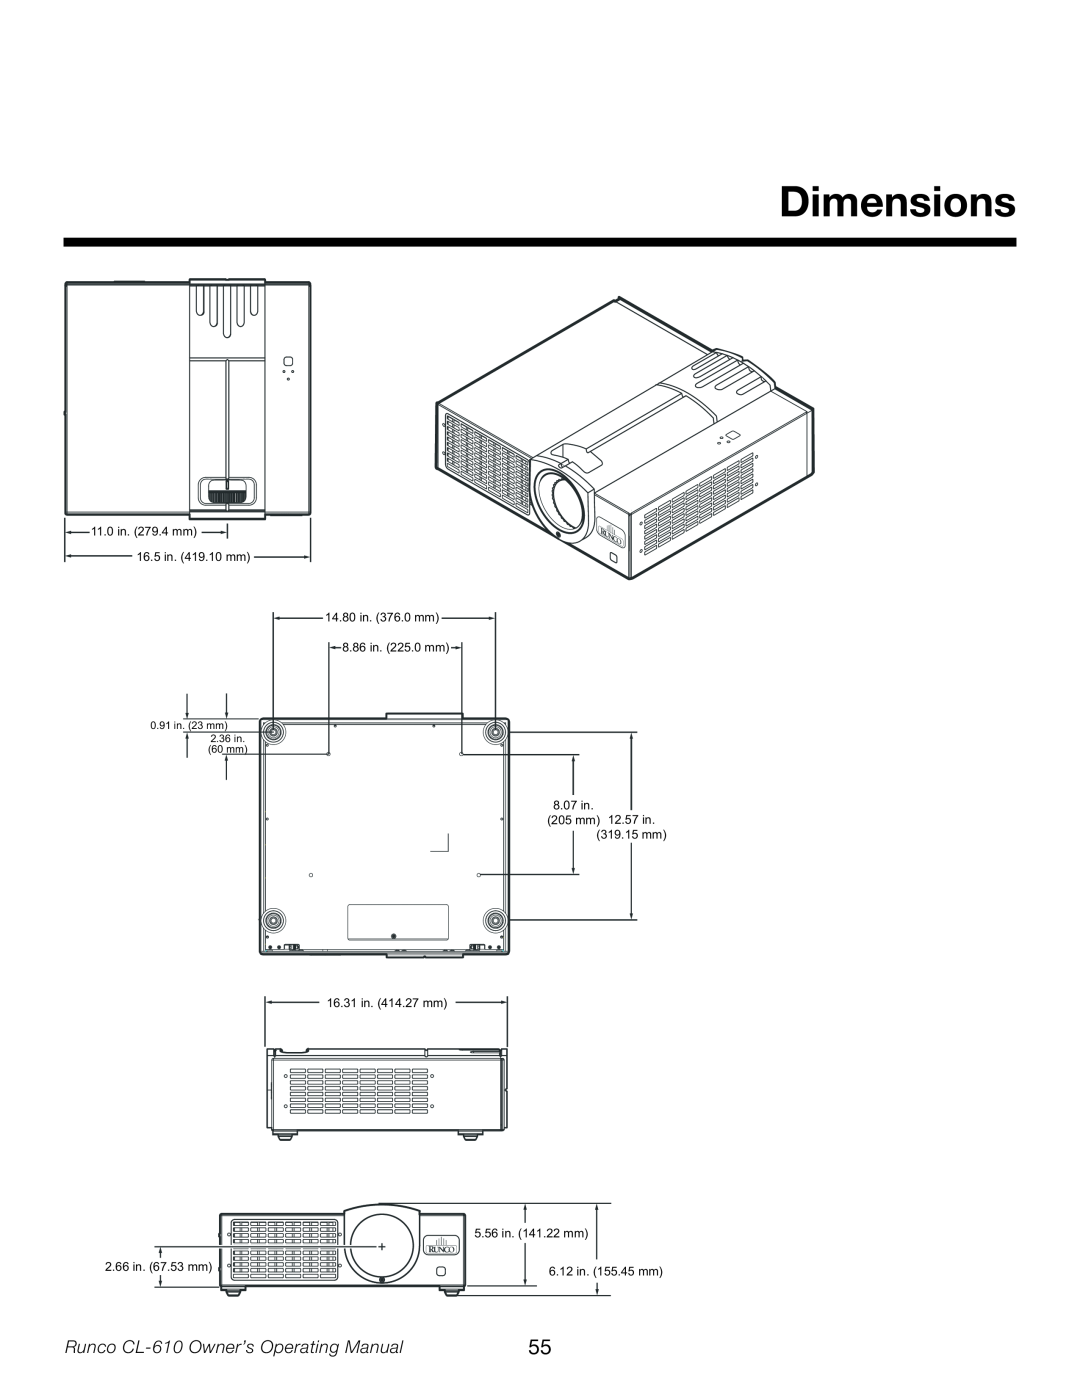 Runco CL-610LT Dimensions, Runco CL-610 Owner’s Operating Manual, 11.0 in. 279.4 mm 16.5 in. 419.10 mm 14.80 in. 376.0 mm 